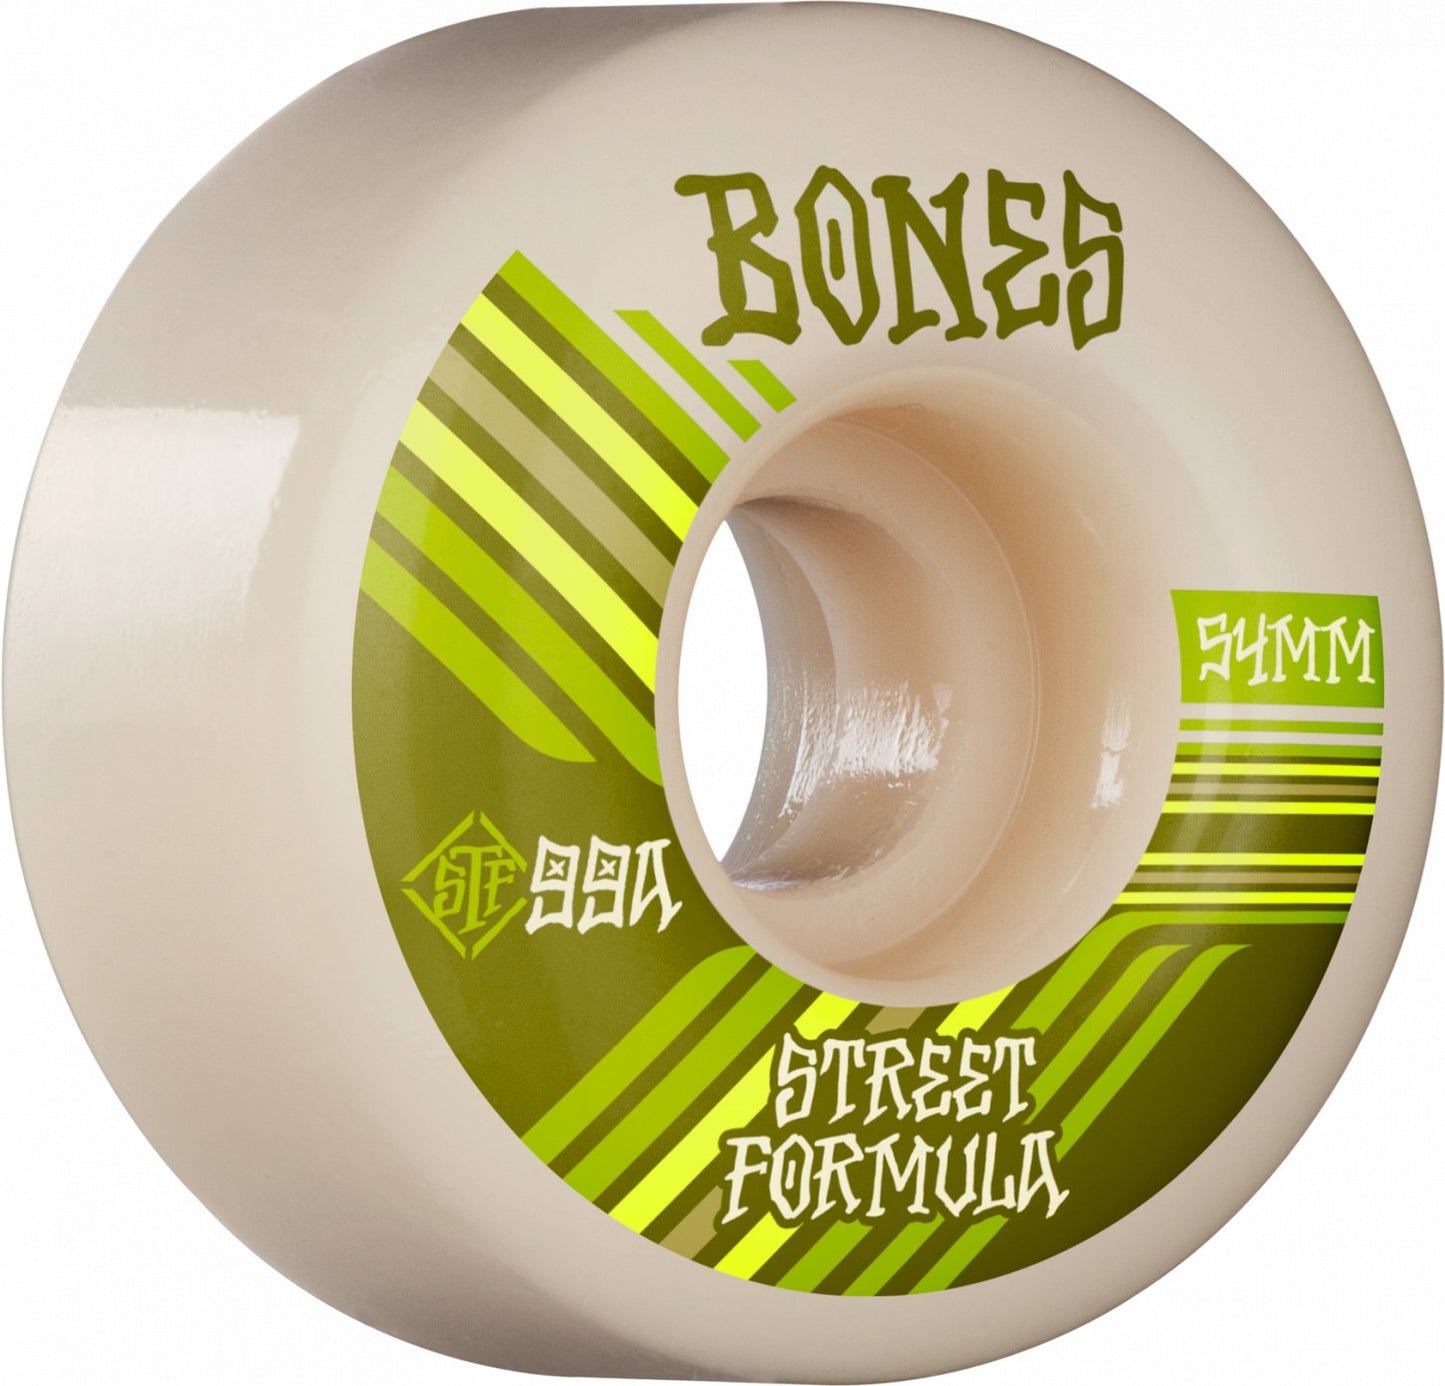 Bones STF Retros V4 Widecut 99a 54mm Wheels